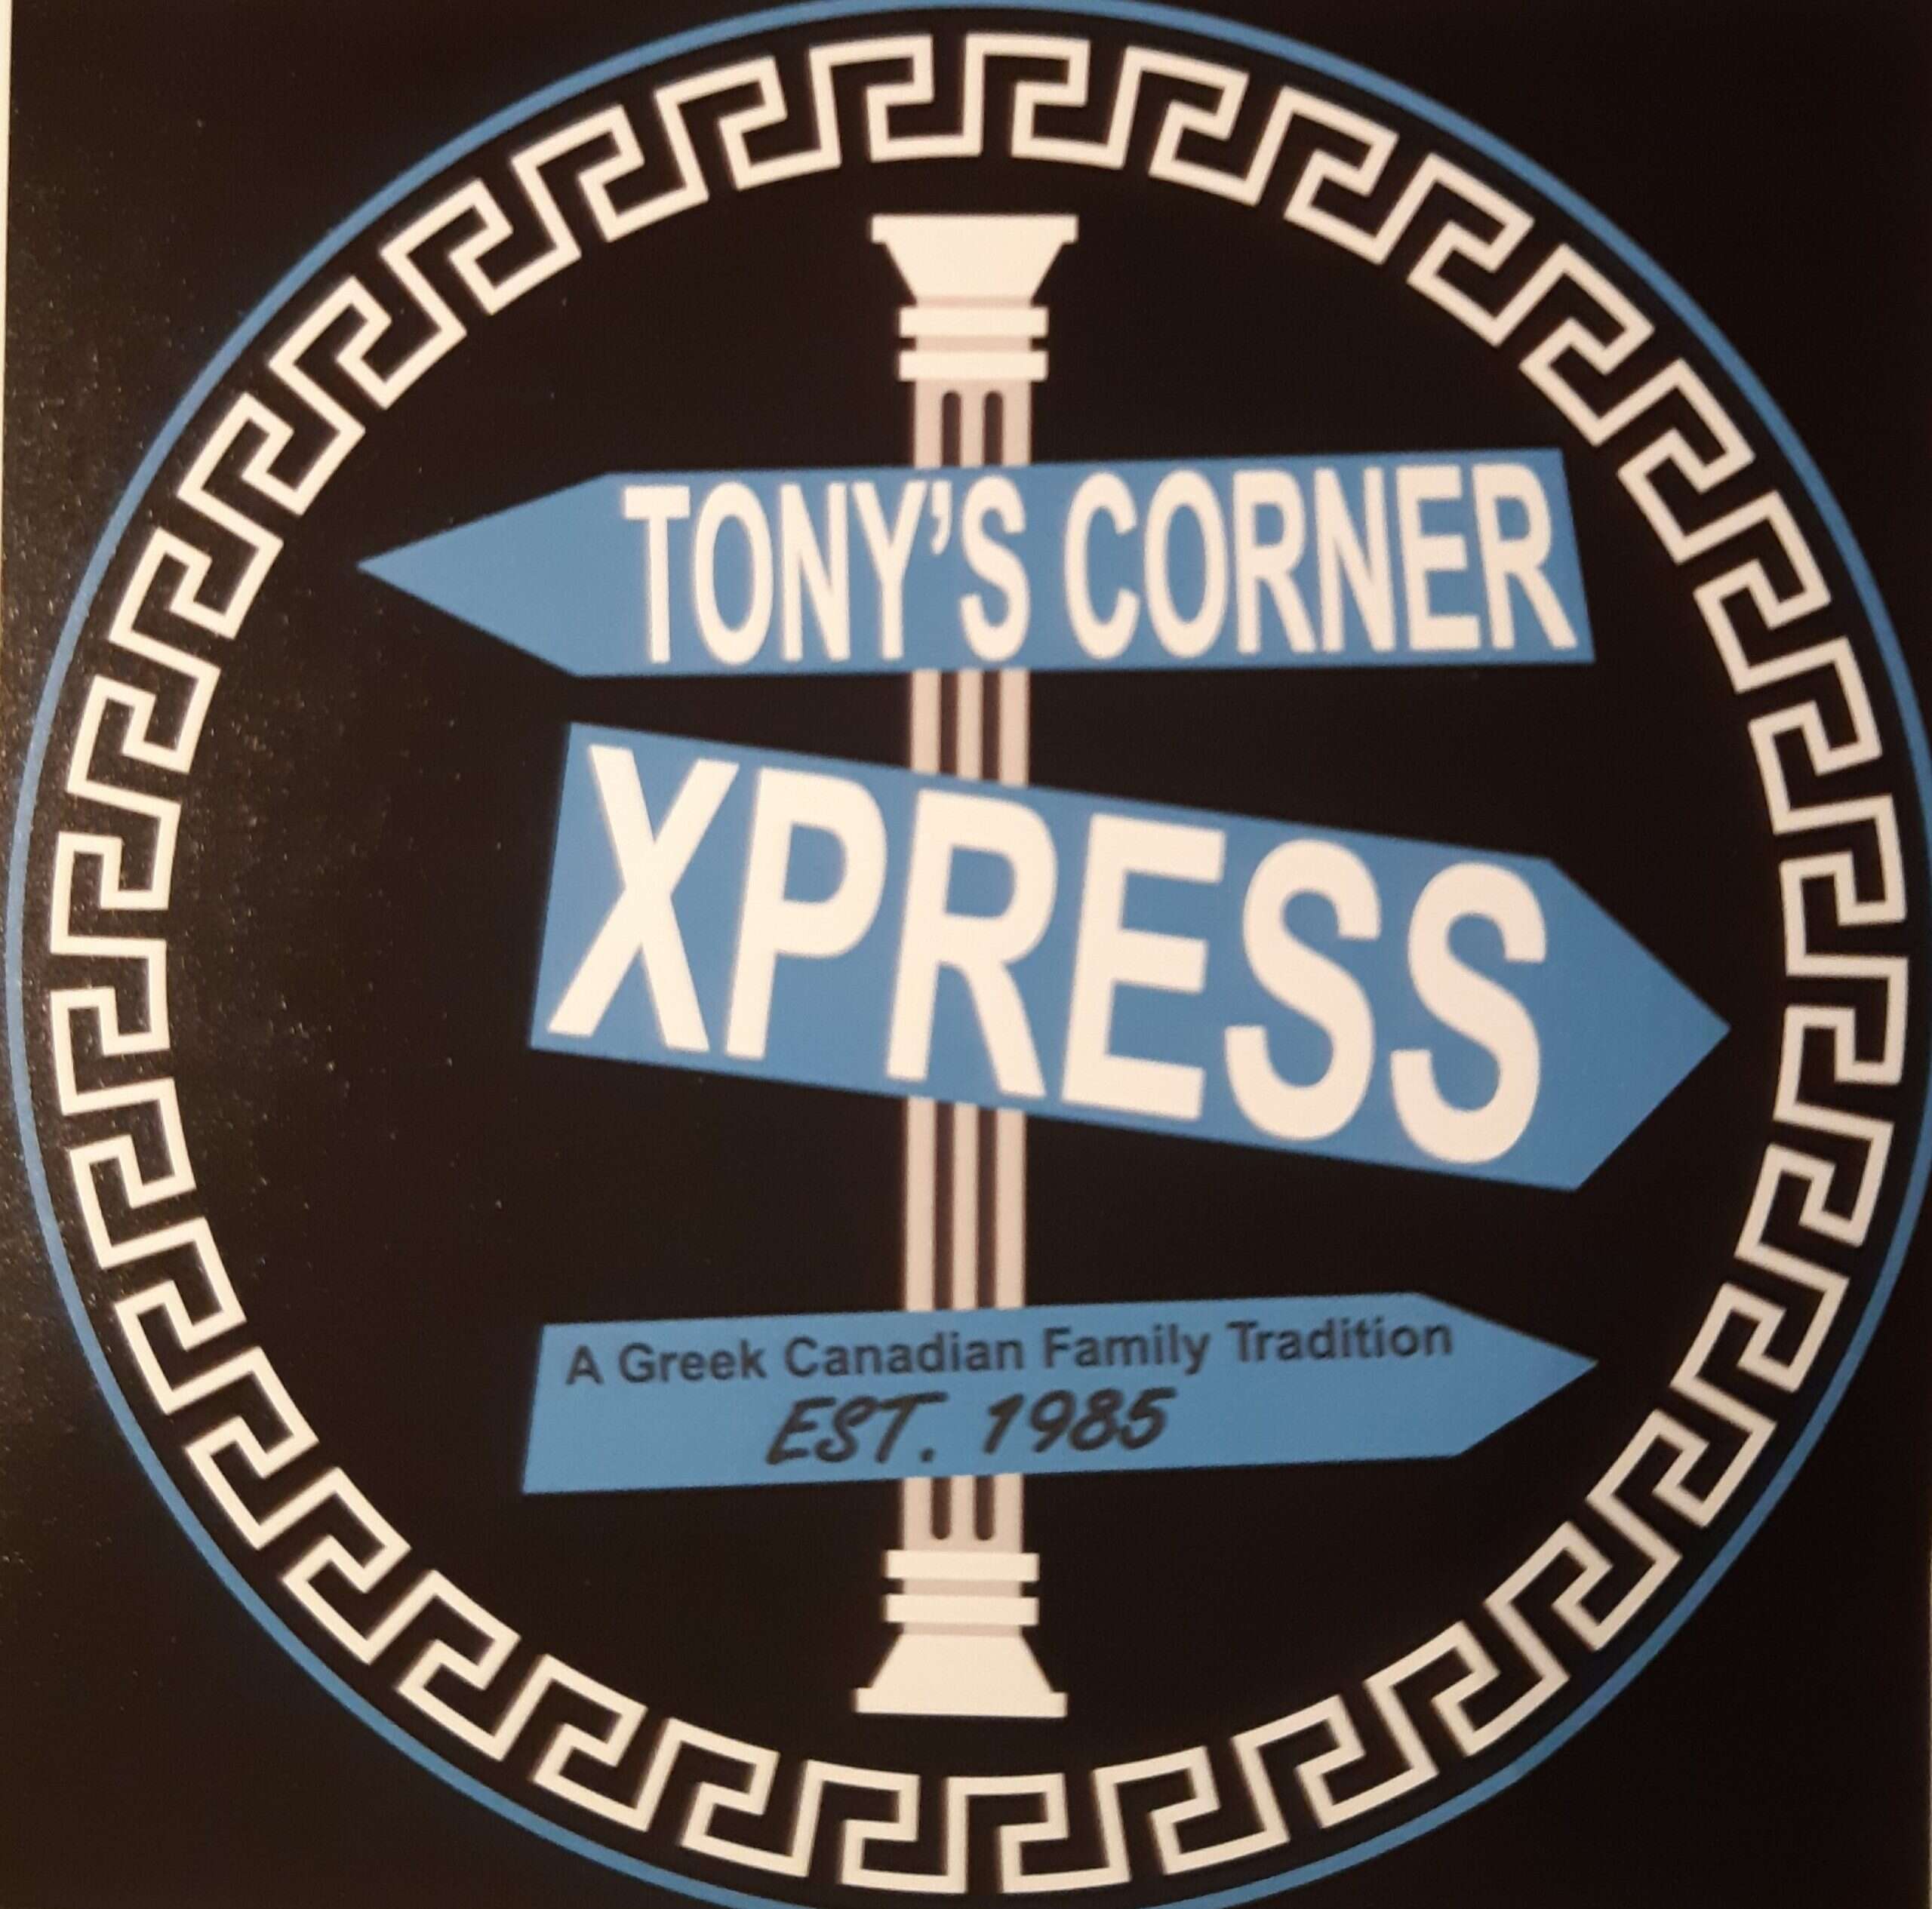 Tony's Corner Xpress